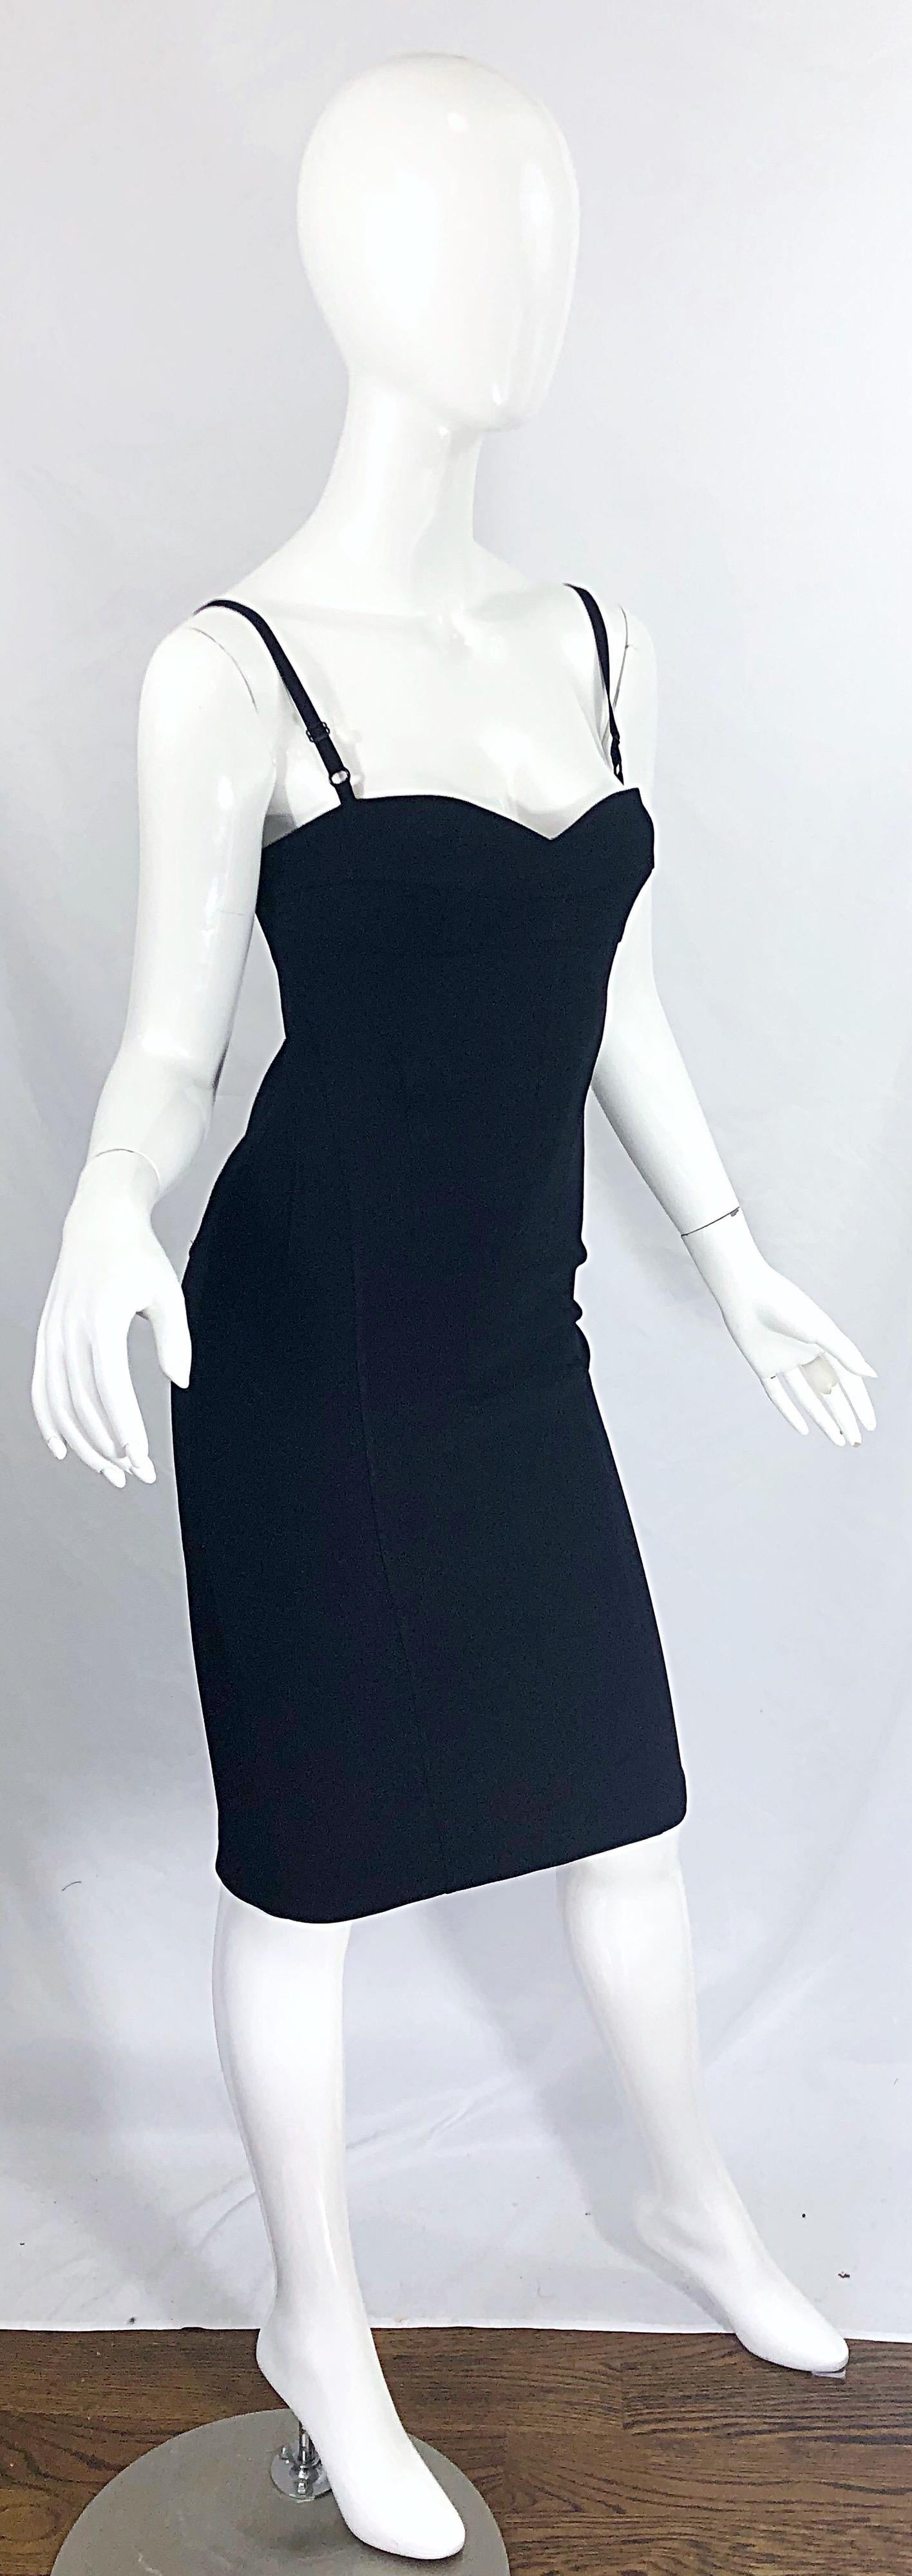 1990s Dolce & Gabbana Black Corset Dress Size 42 US 6 - 8 Vintage 90s Iconic LBD For Sale 3